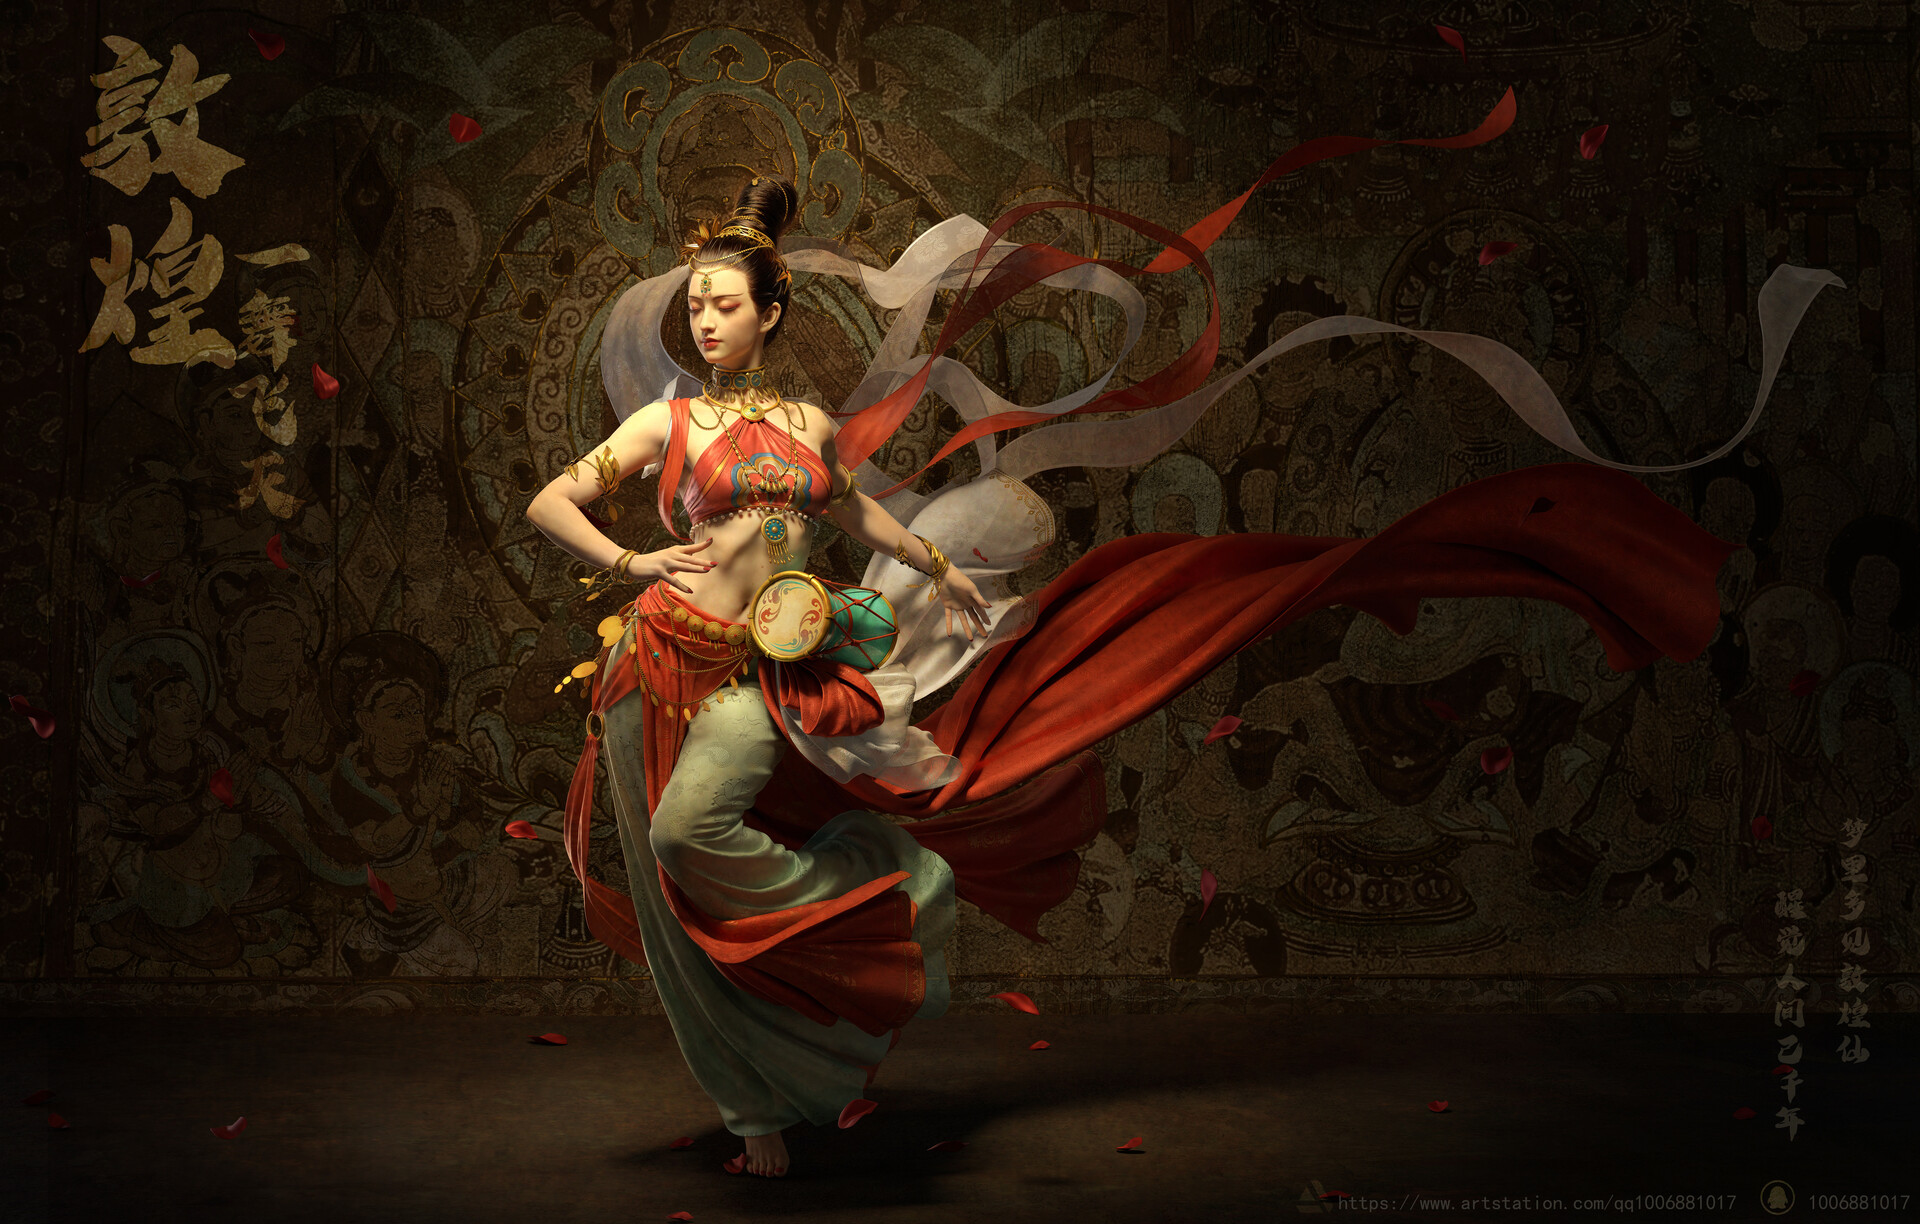 General 1920x1224 Baogu Er Ba CGI women Asian shawl pattern digital art dancing petals watermarked jewelry closed eyes